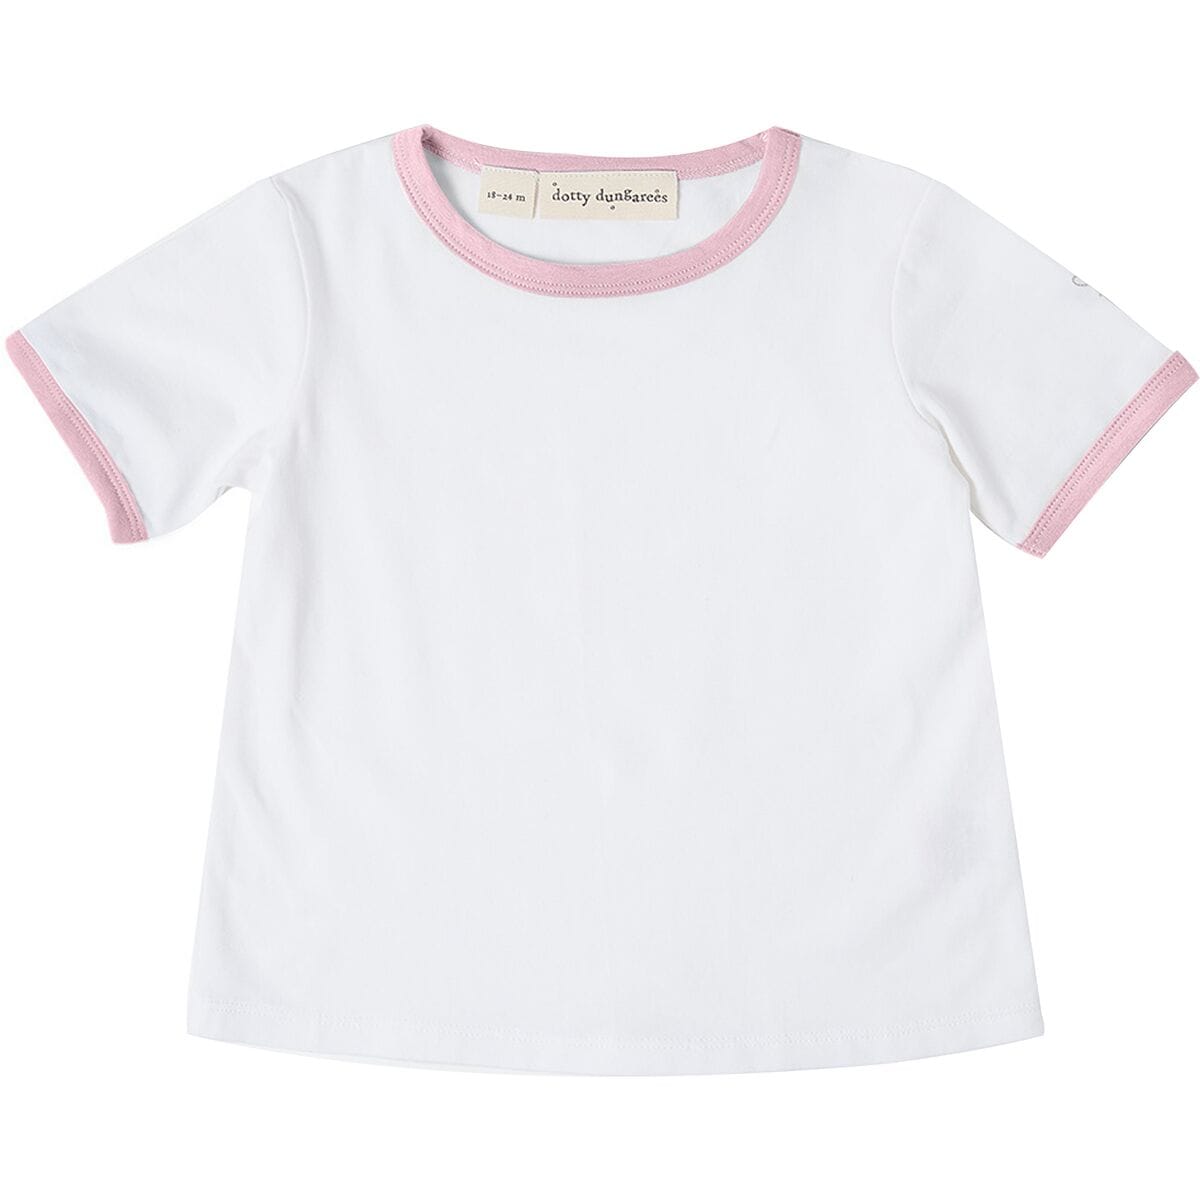 Dotty Dungarees The Jack T-Shirt - Toddler Girls'